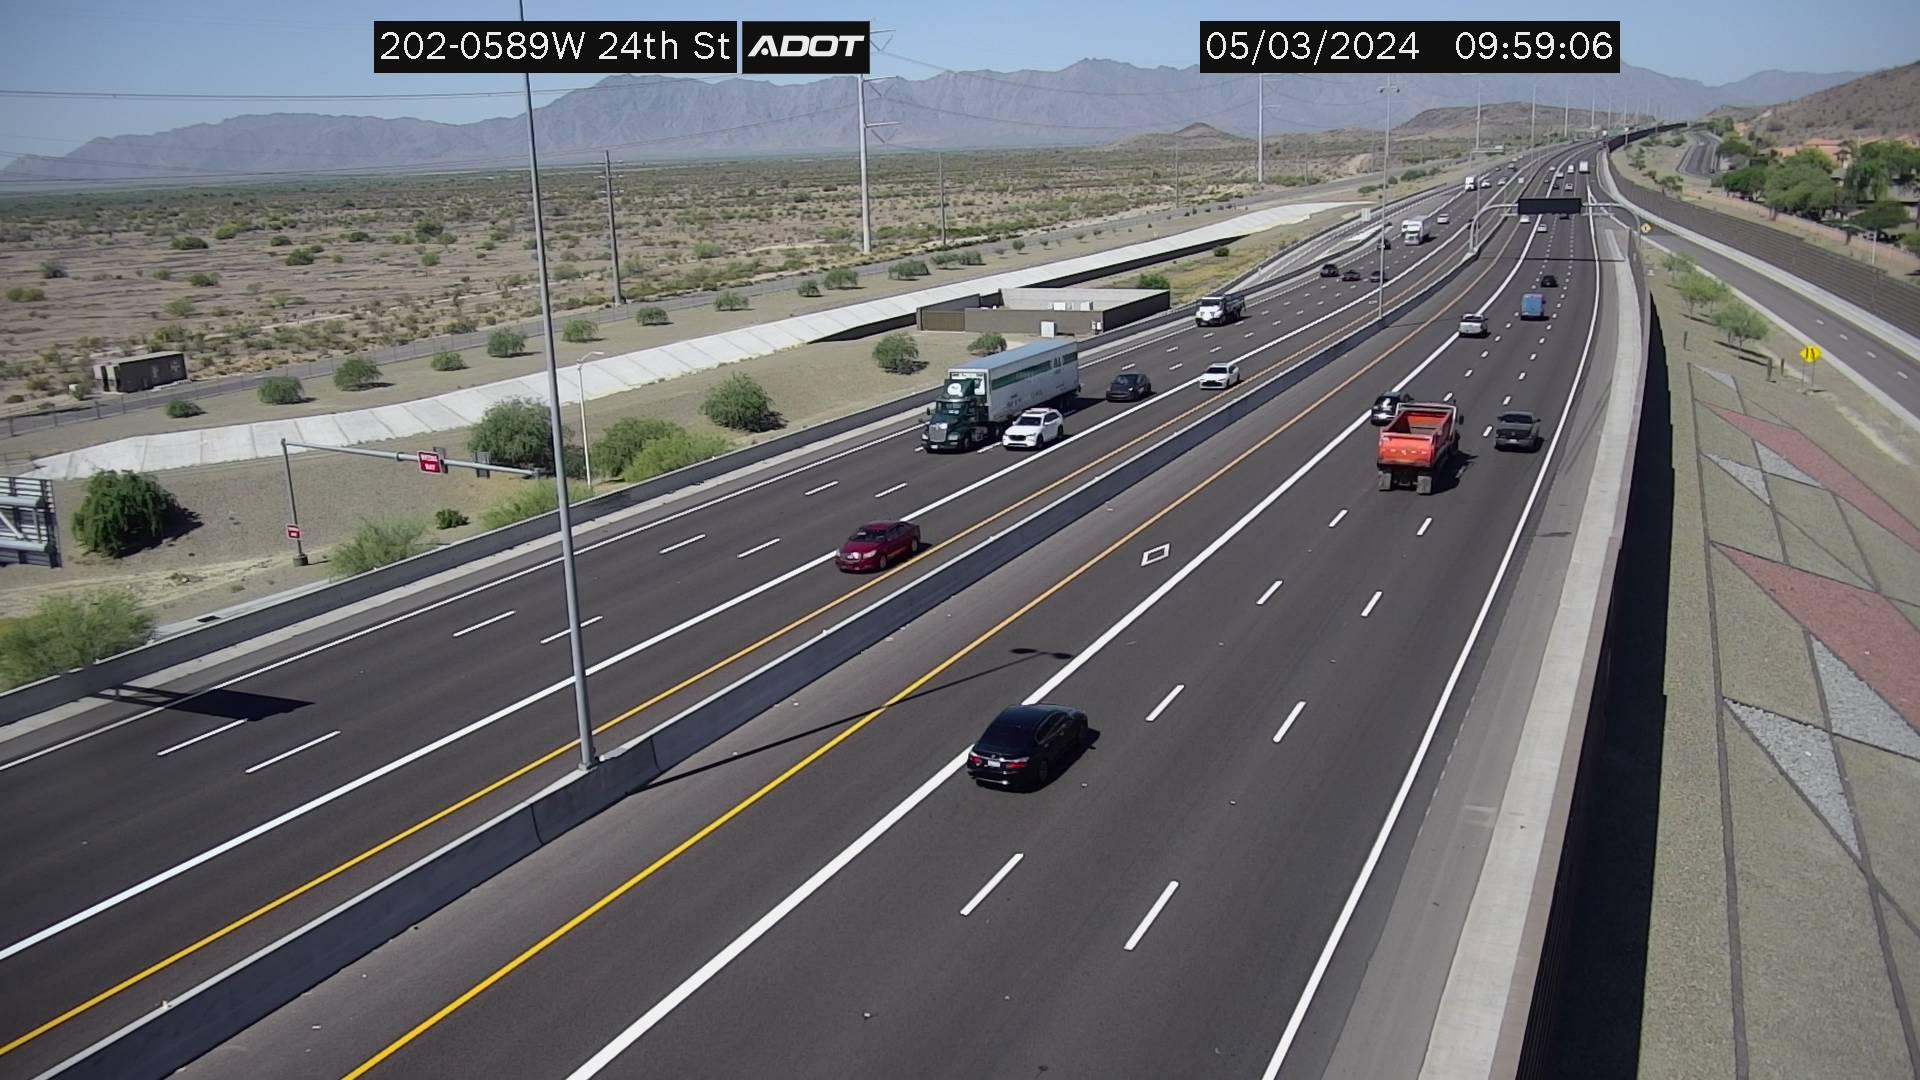 Phoenix › West: SR-202 WB 58.90 @24th St Traffic Camera